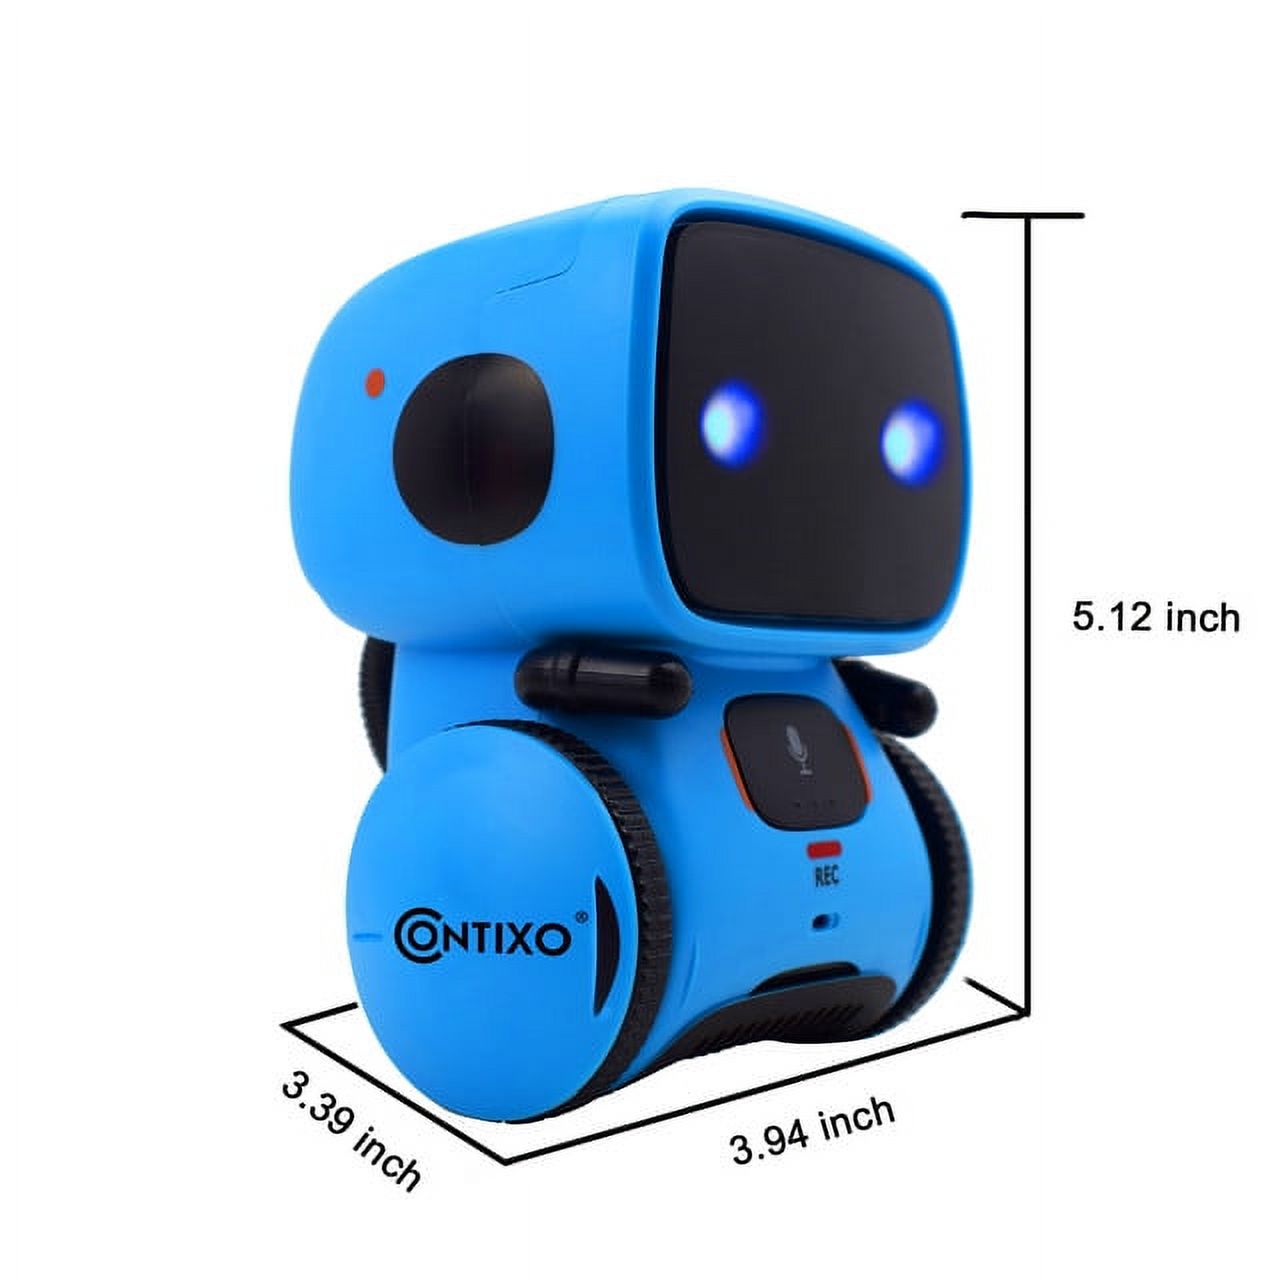 Contixo Kids Smart Robot Toy Mini Robot Talking Singing Dancing Interactive Voice Control Touch Sensor Speech Recognition Infant Toddler Children Robotics - R1 Blue - image 4 of 6